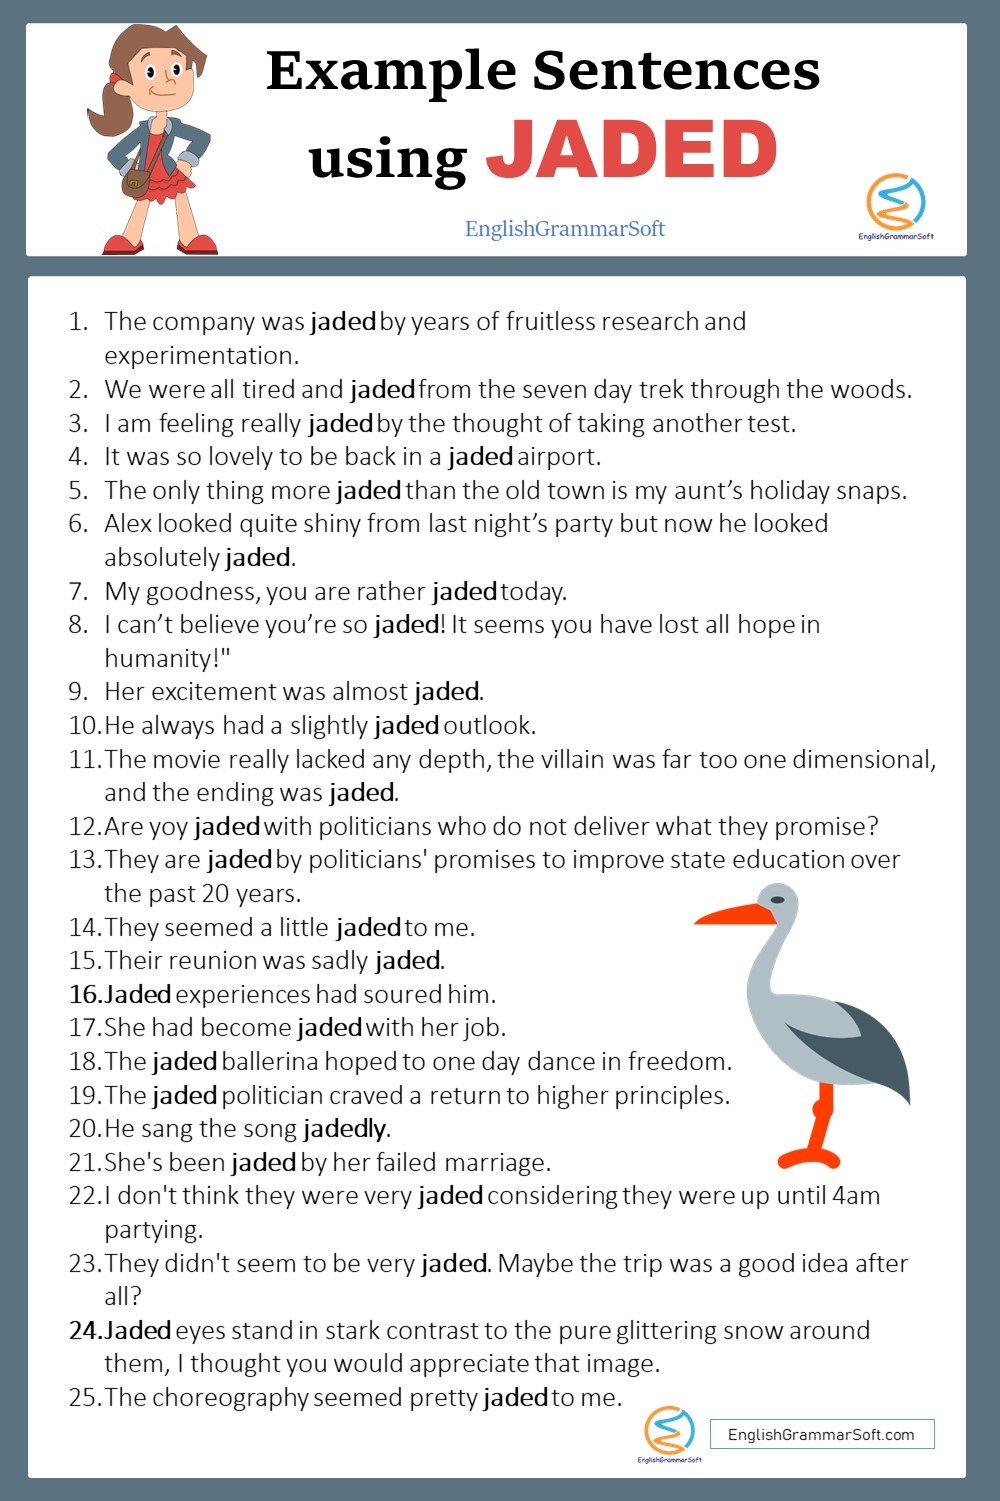 50 Example Sentences using Jaded